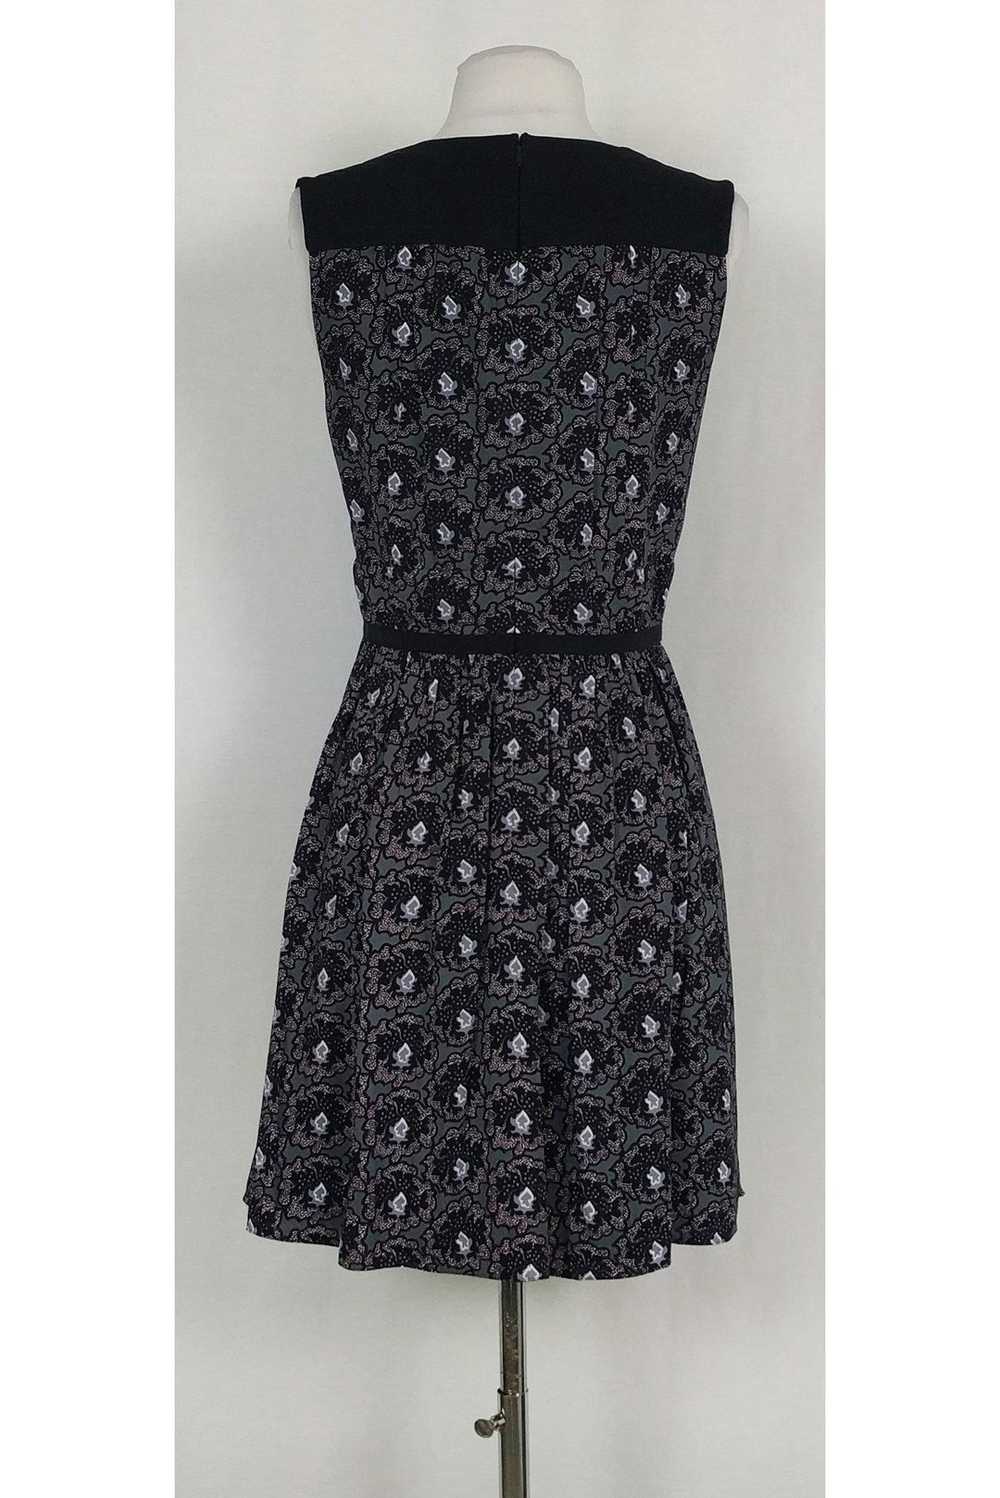 Prada - Black, Grey & Lavender Floral Dress Sz 2 - image 3